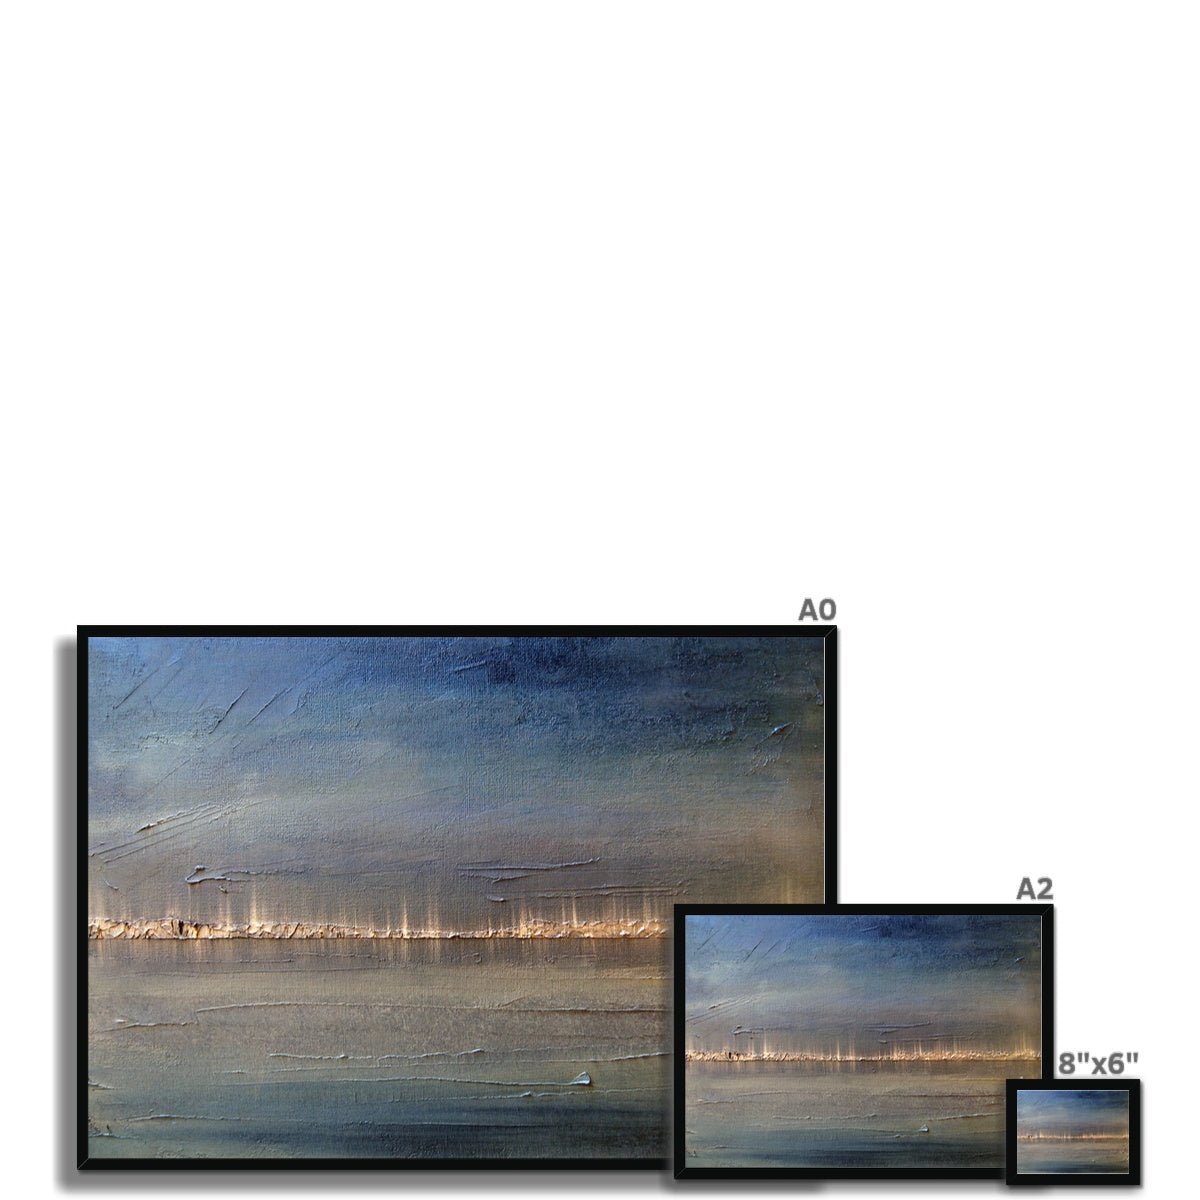 Distant Lights Lake Ontario Painting | Framed Prints From Scotland-Framed Prints-World Art Gallery-Paintings, Prints, Homeware, Art Gifts From Scotland By Scottish Artist Kevin Hunter